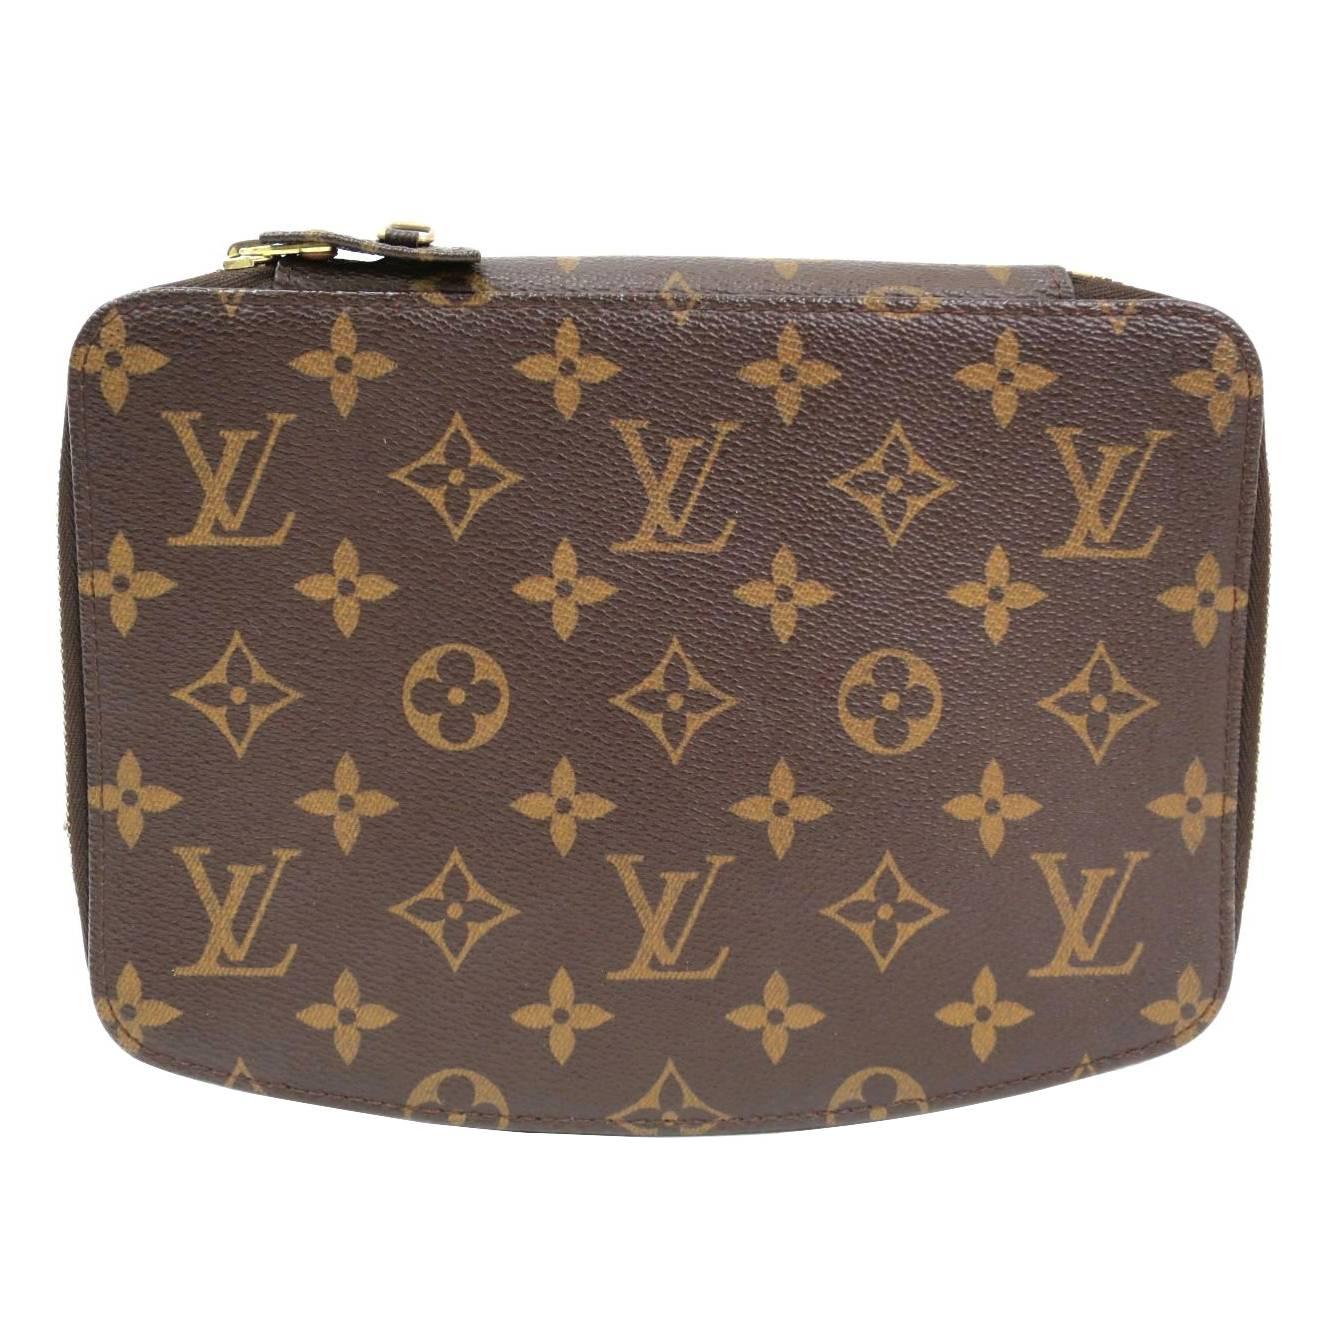 Louis Vuitton Monogram Men's Storage Jewelry Carryall Vanity Travel Bag Case